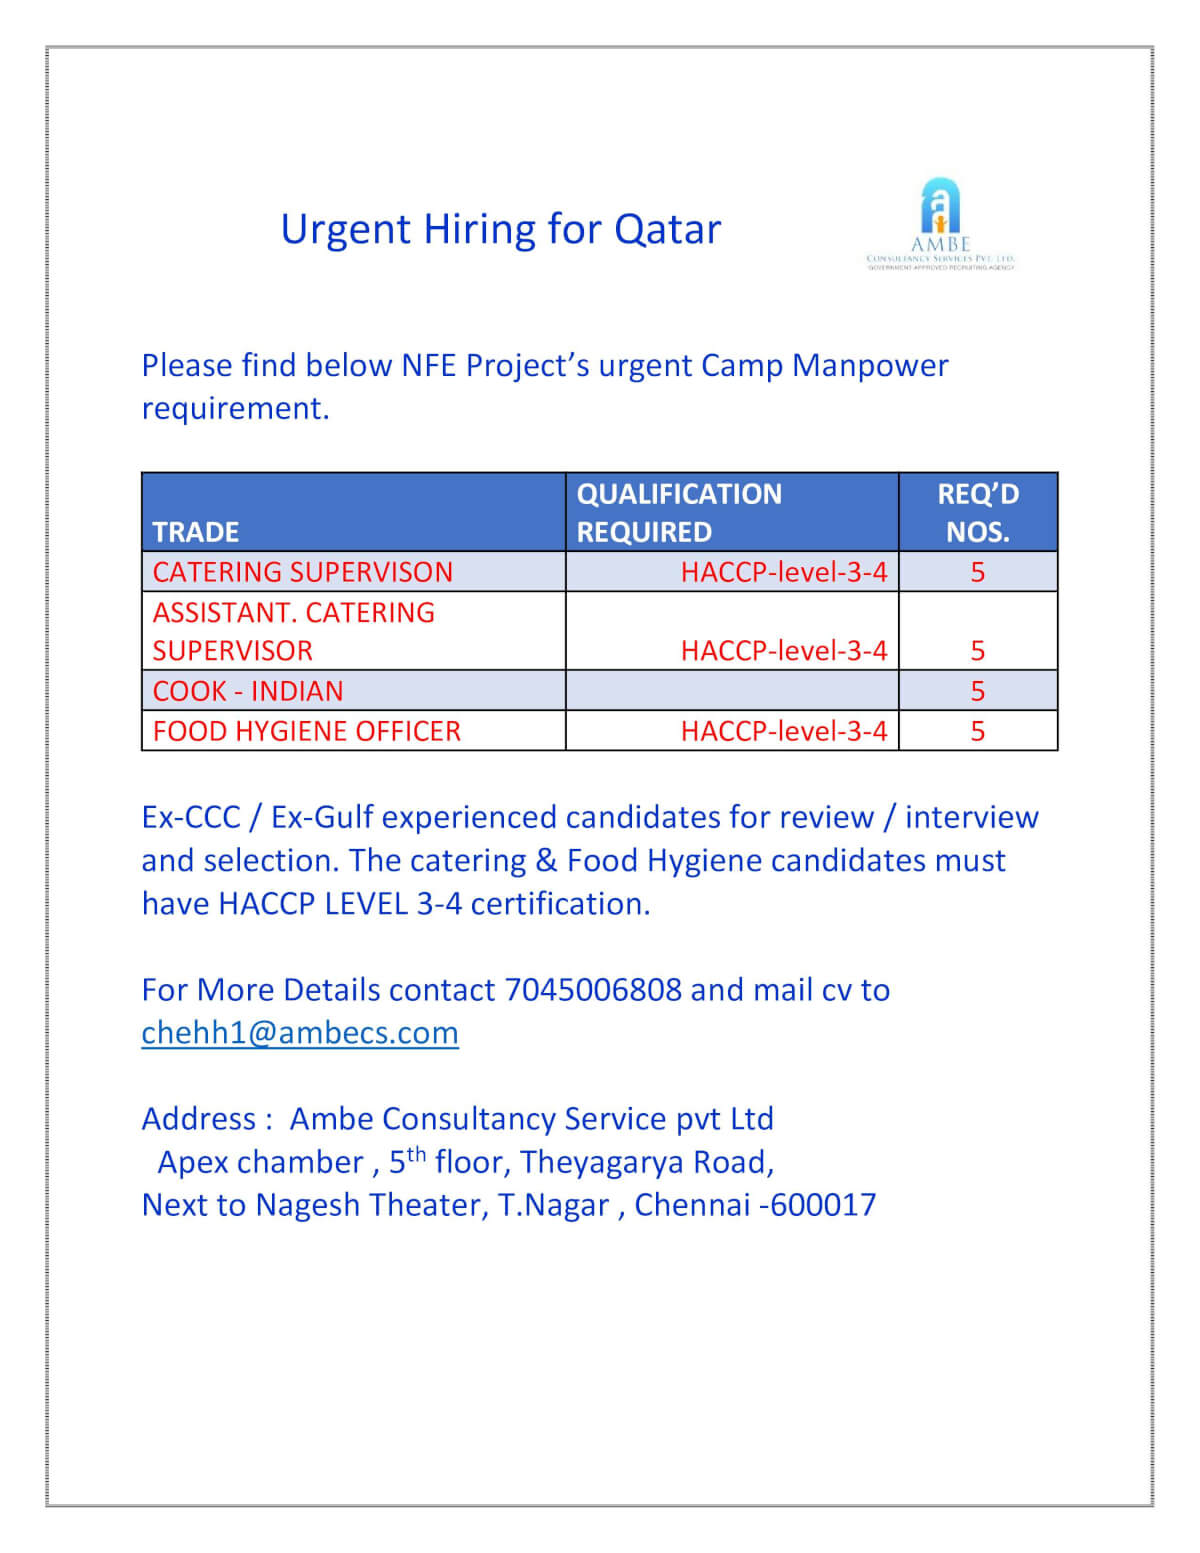 Urgent Hiring for Qatar ccc